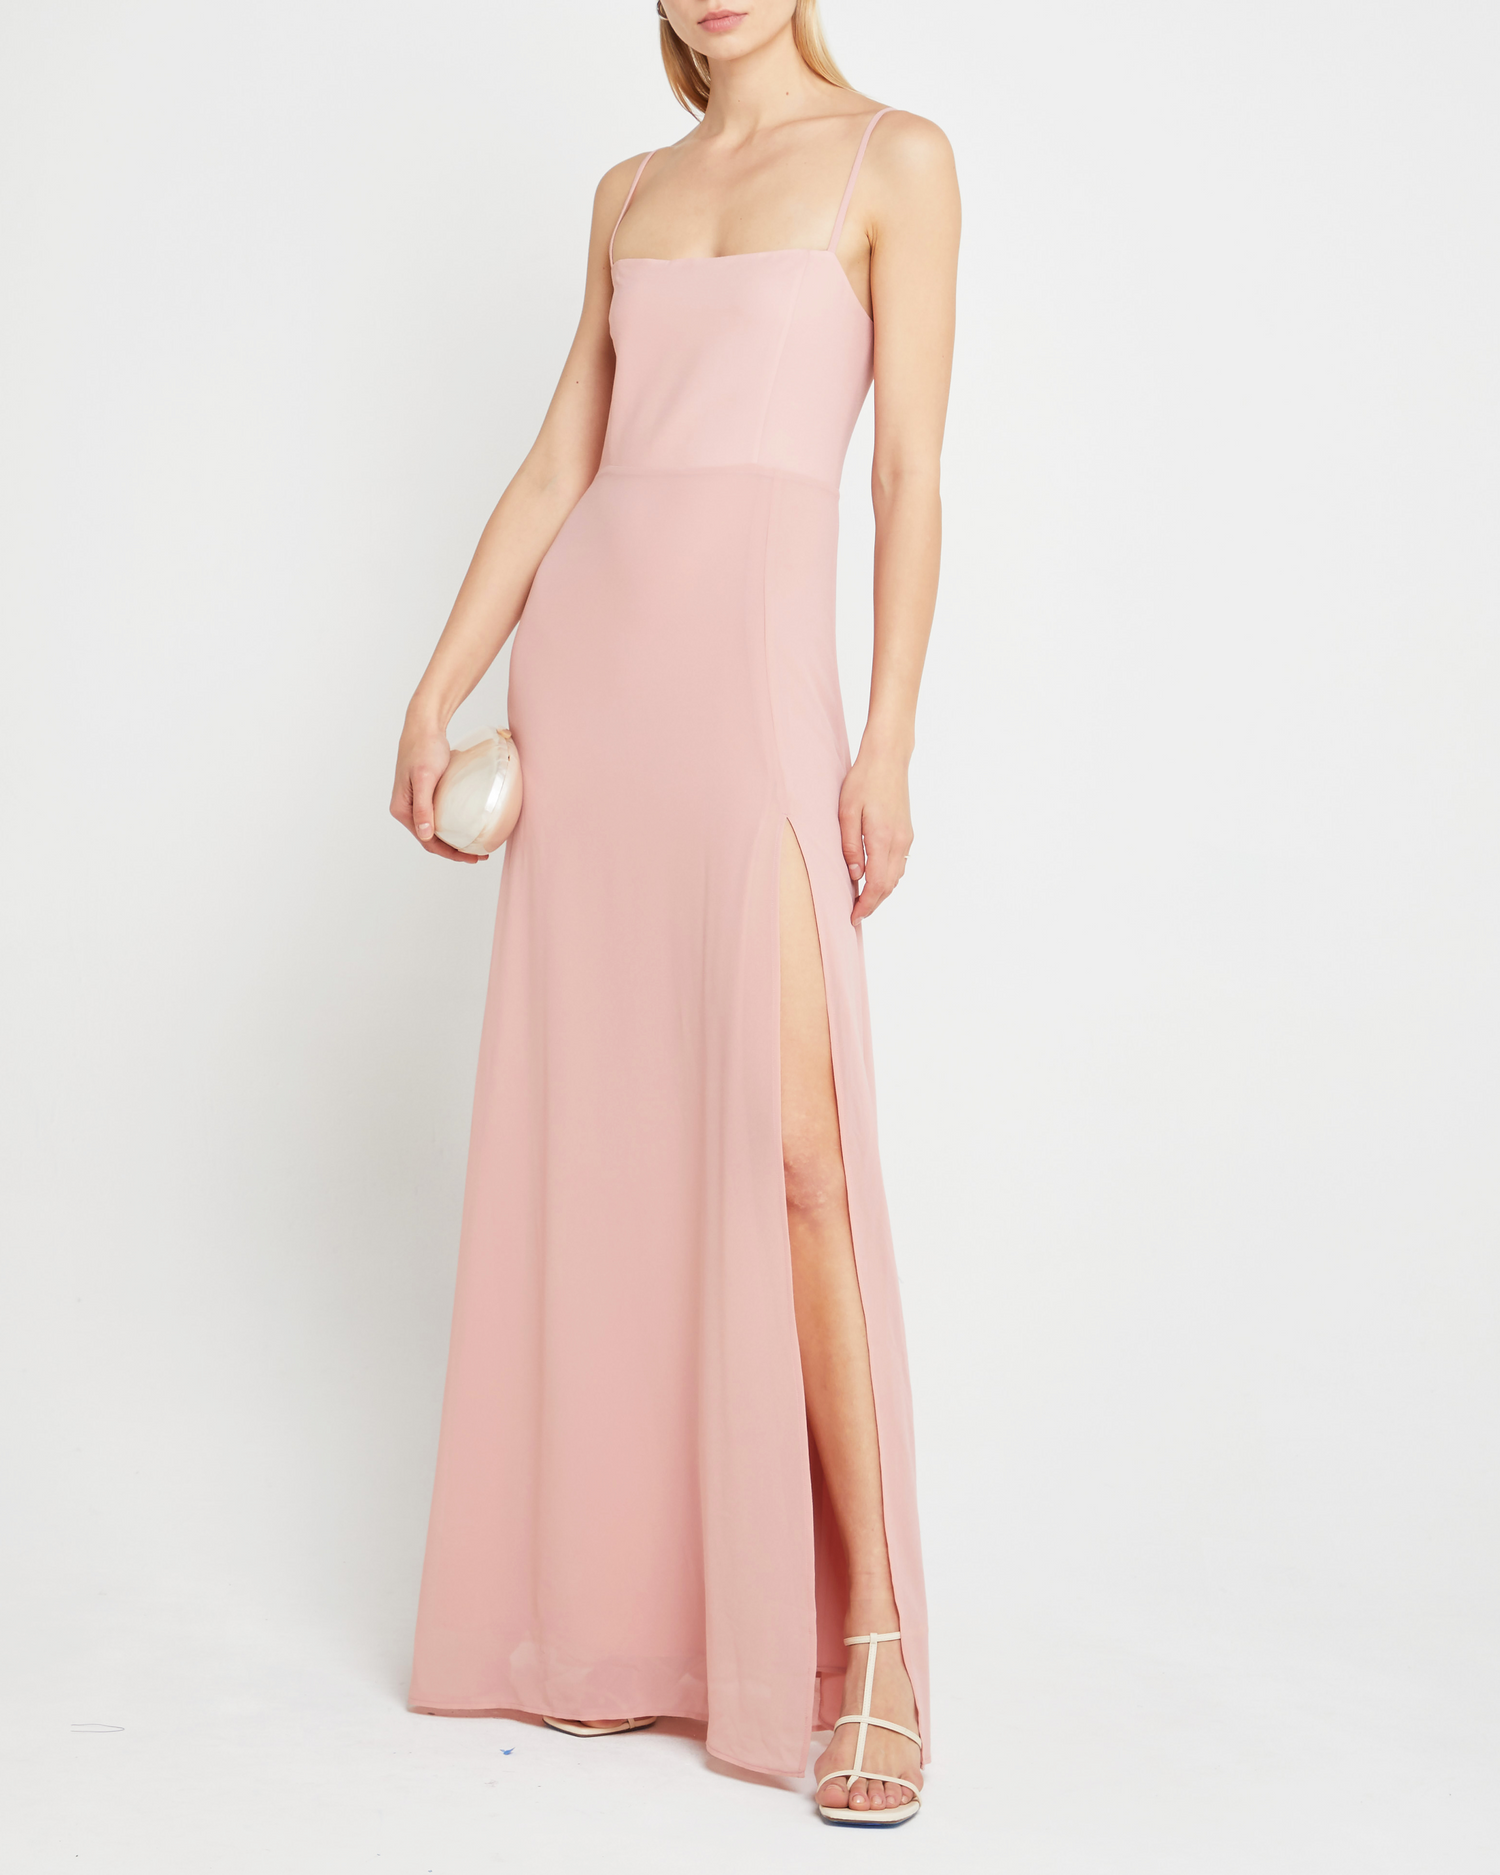 Jessica Maxi Dress | Shop for Wedding Guest Dresses